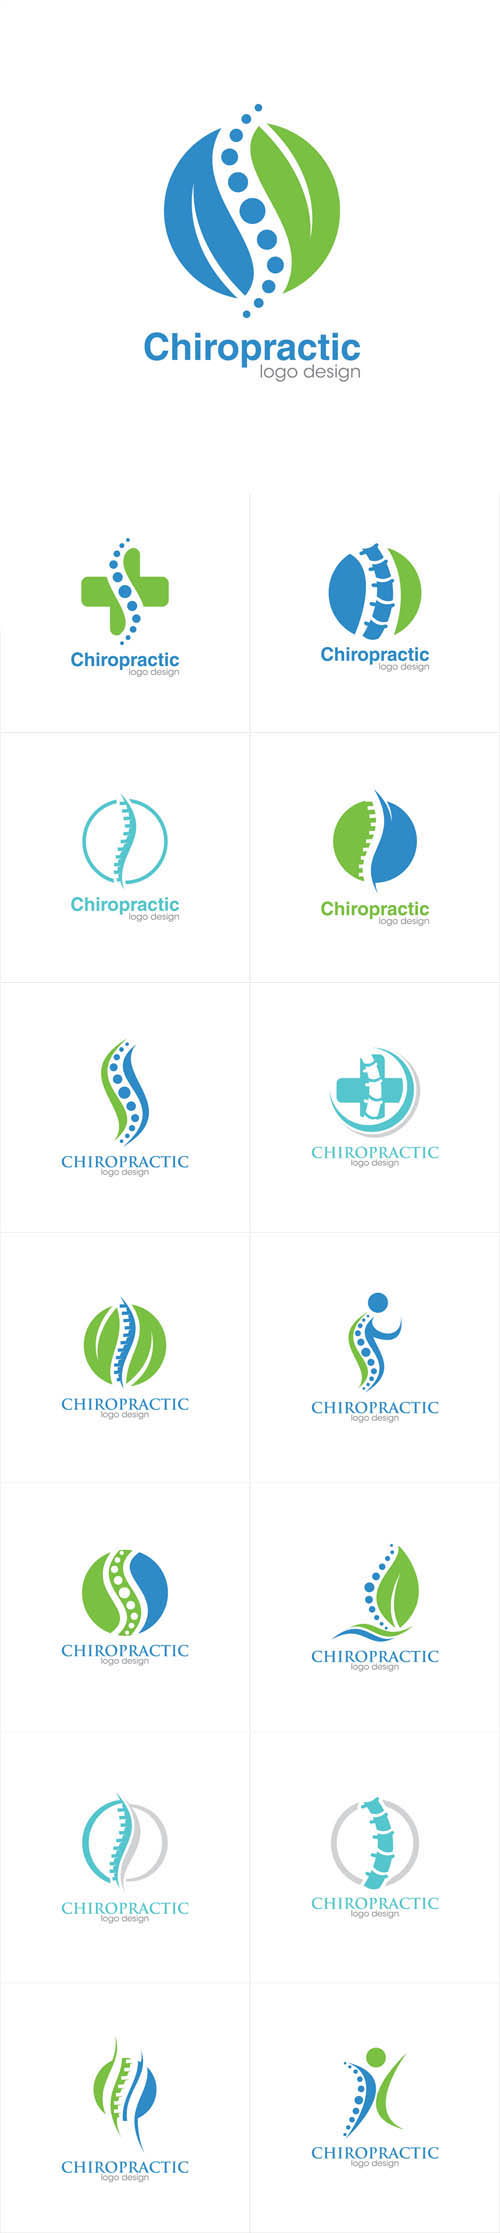 Vectors - Medical Chiropractic Creative Concept Logo Design Templates